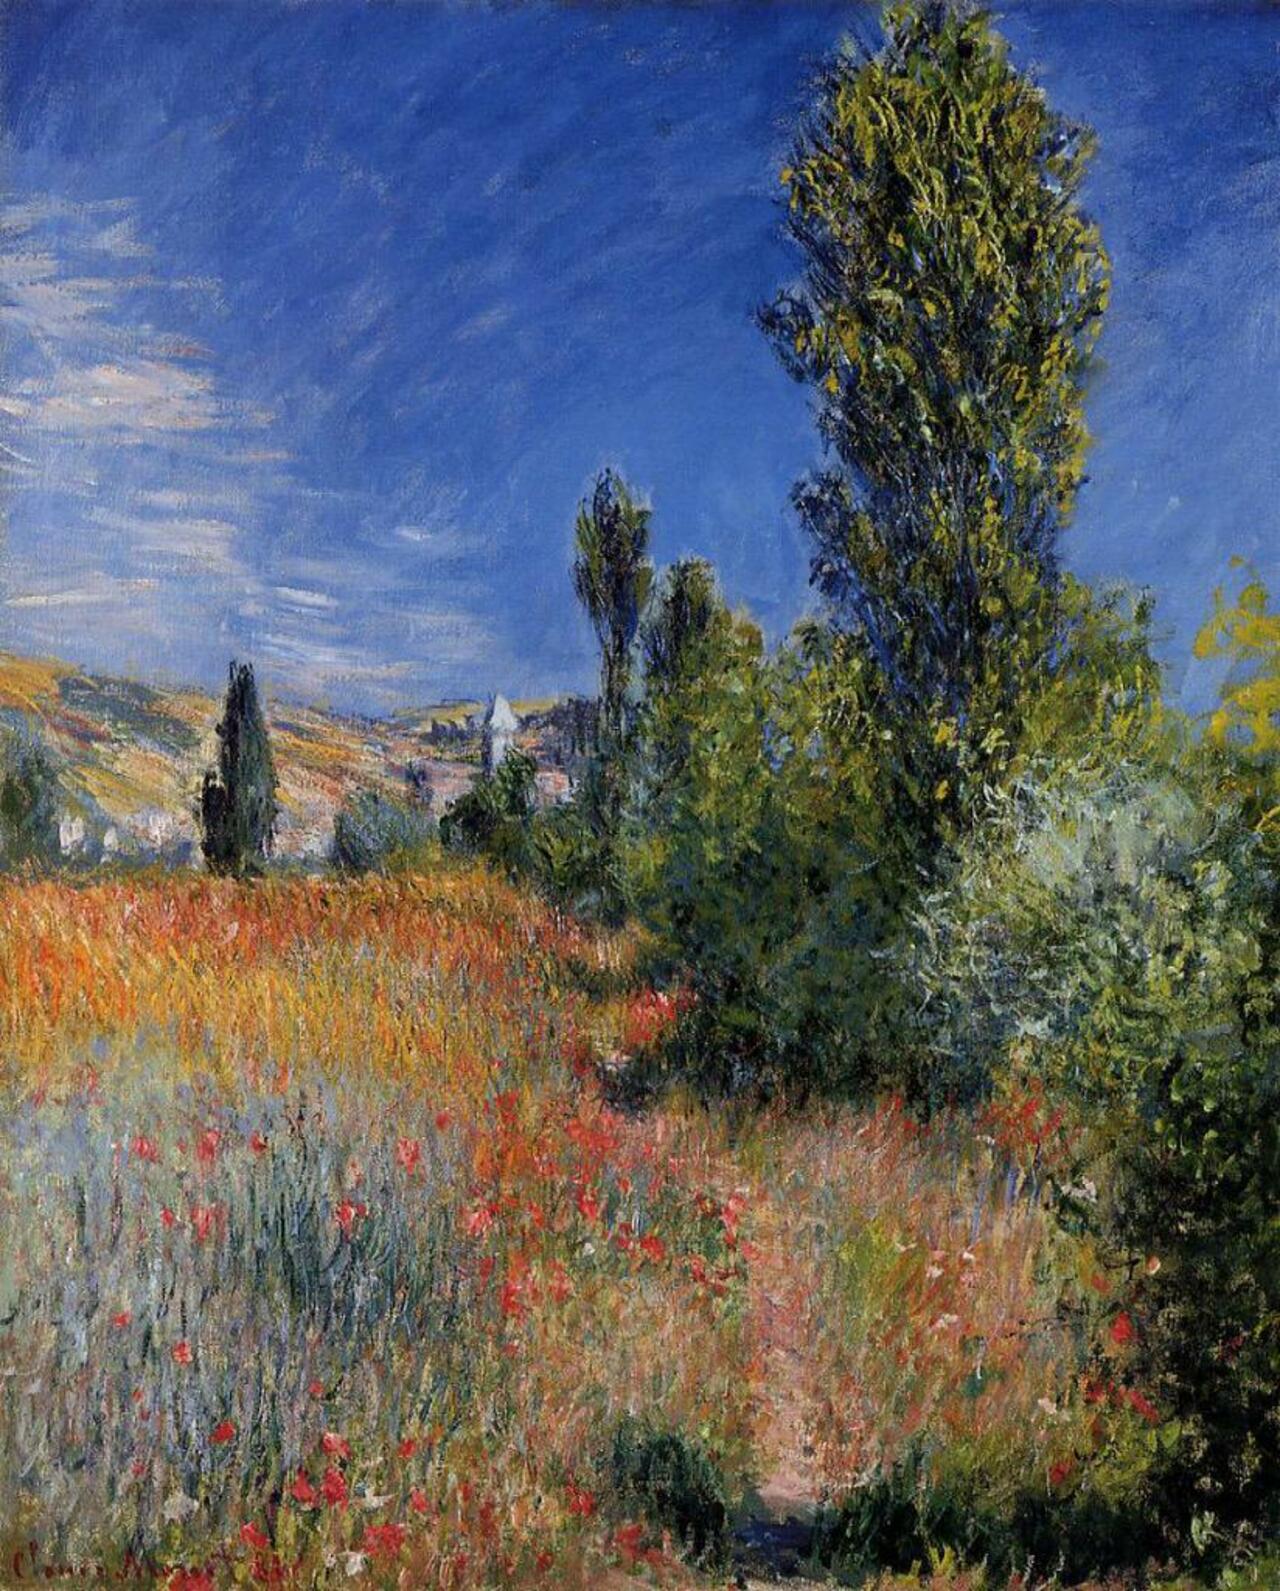 "@tiagoaparicio: Claude Monet (#Paris 1840- #Giverny 1926). #painting #impressionism
«Paysage de l'île Saint-Martin" http://t.co/NIcgLjuFYj"